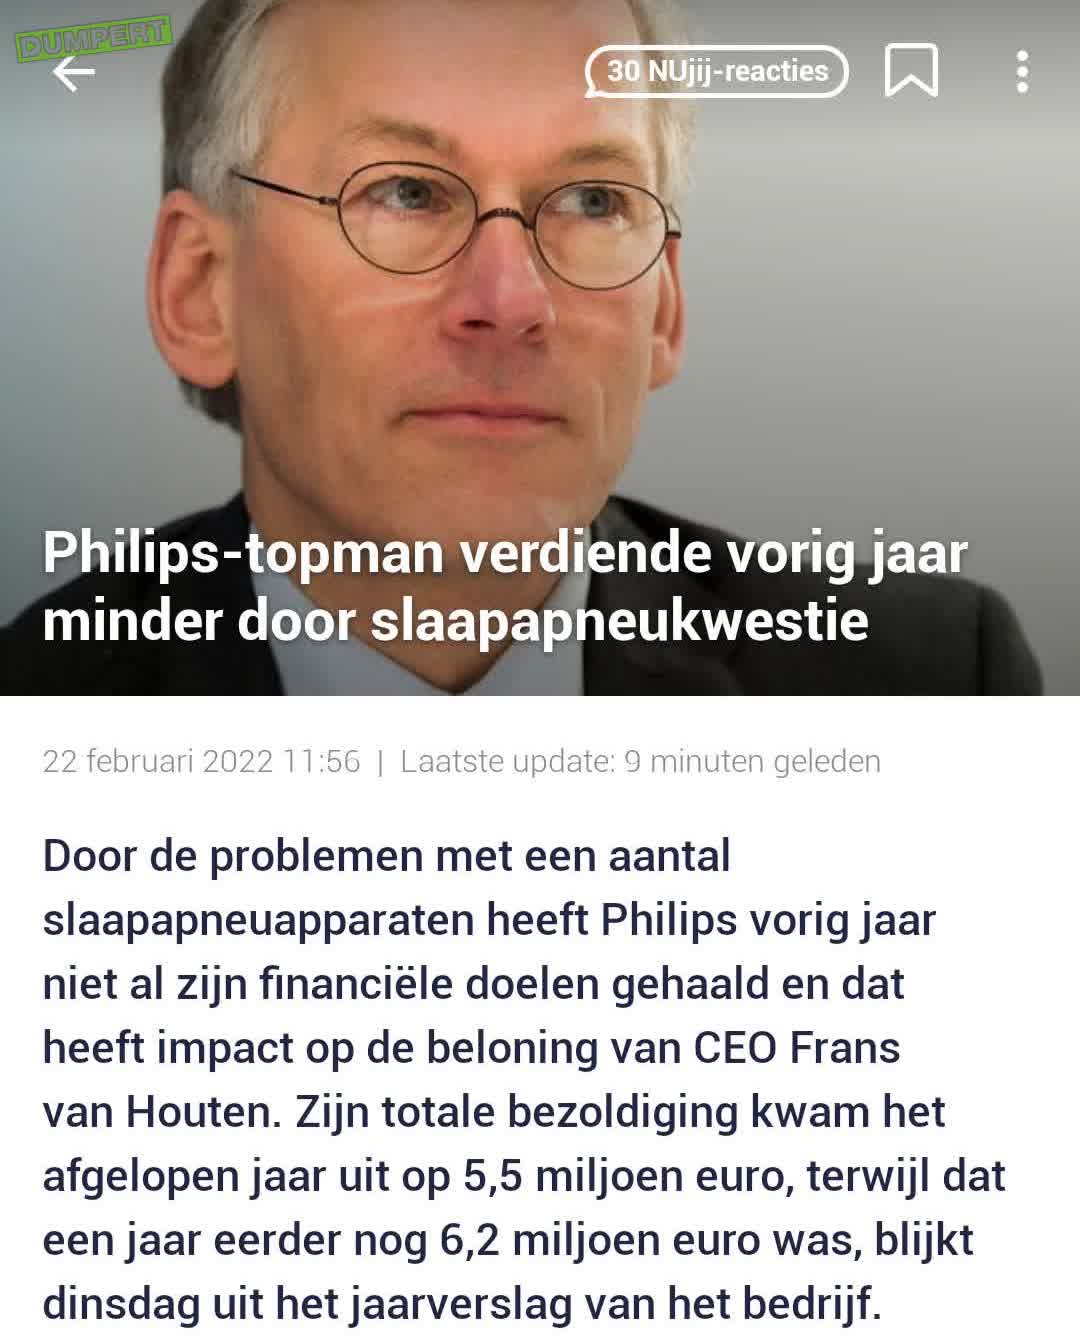 Typfoutje op nu.nl